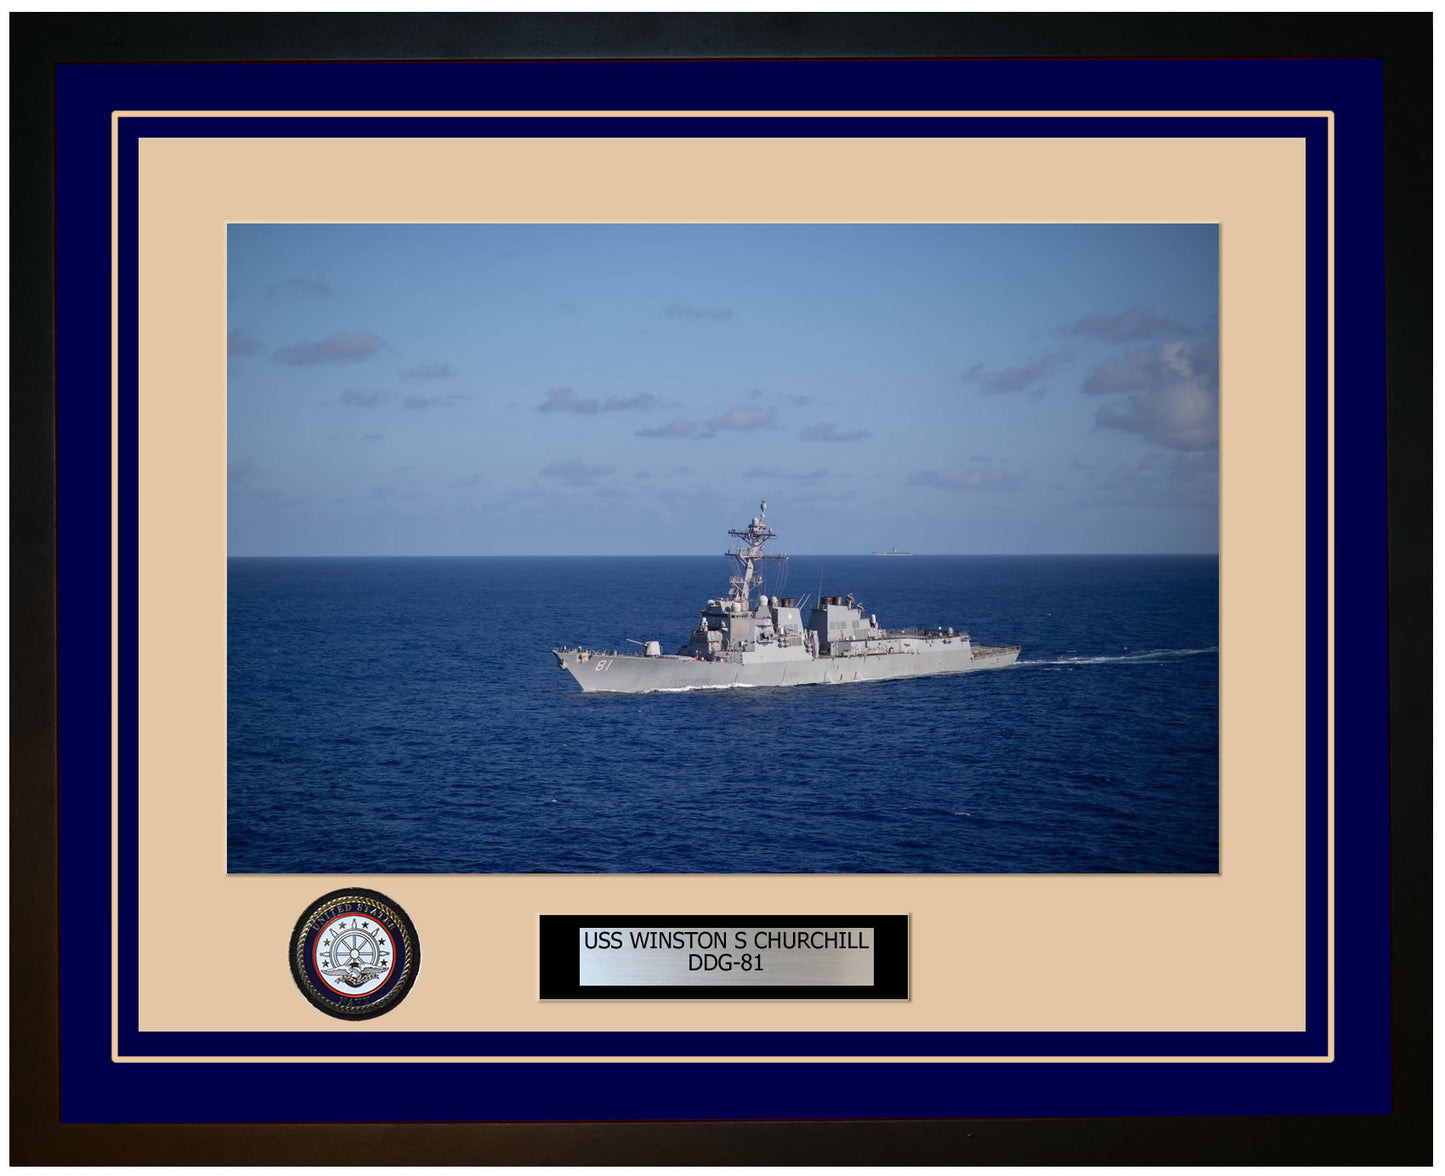 USS WINSTON S CHURCHILL DDG-81 Framed Navy Ship Photo Blue